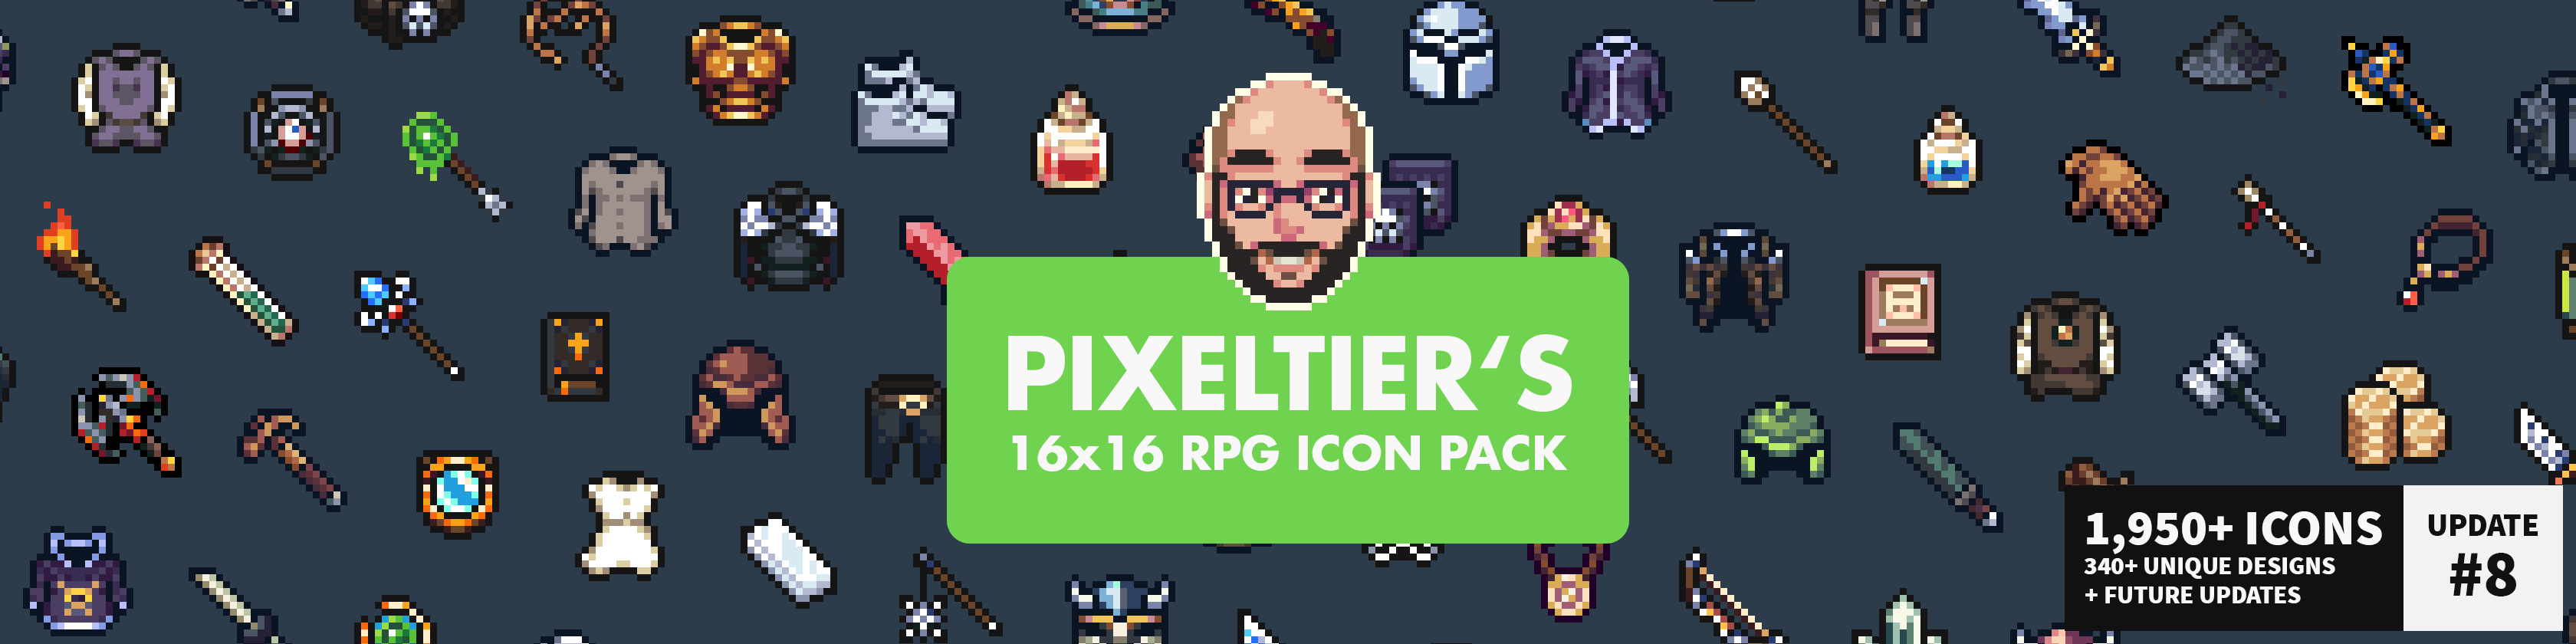 Pixeltier's 16x16 RPG Icon Pack /// Pixel Art